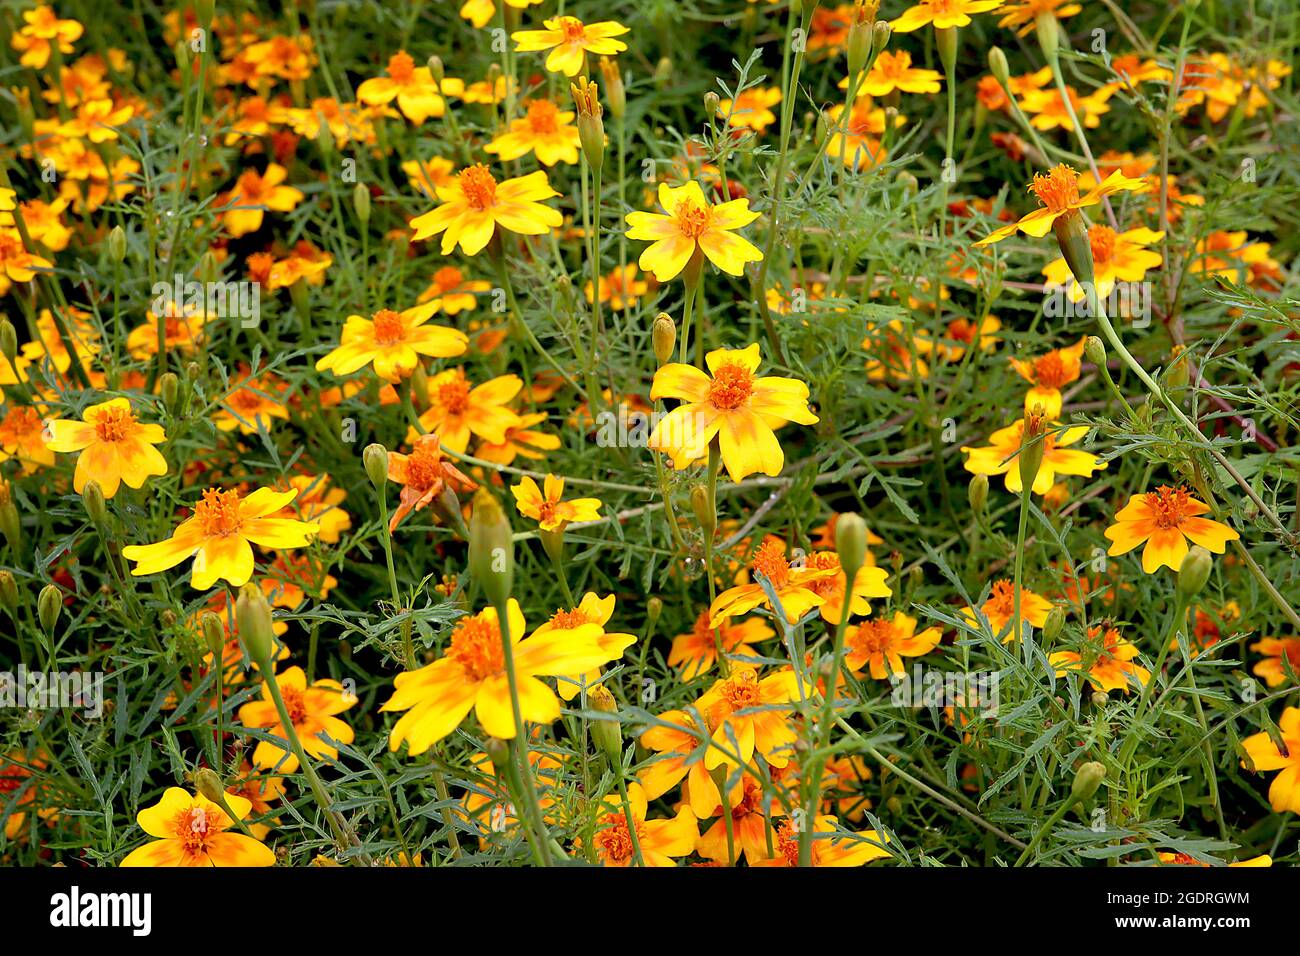 Tagetes tenuifolia ‘Golden Gem’ signet marigold Golden Gem – golden yellow flowers with orange markings and notched petals, flower crown of orange Stock Photo